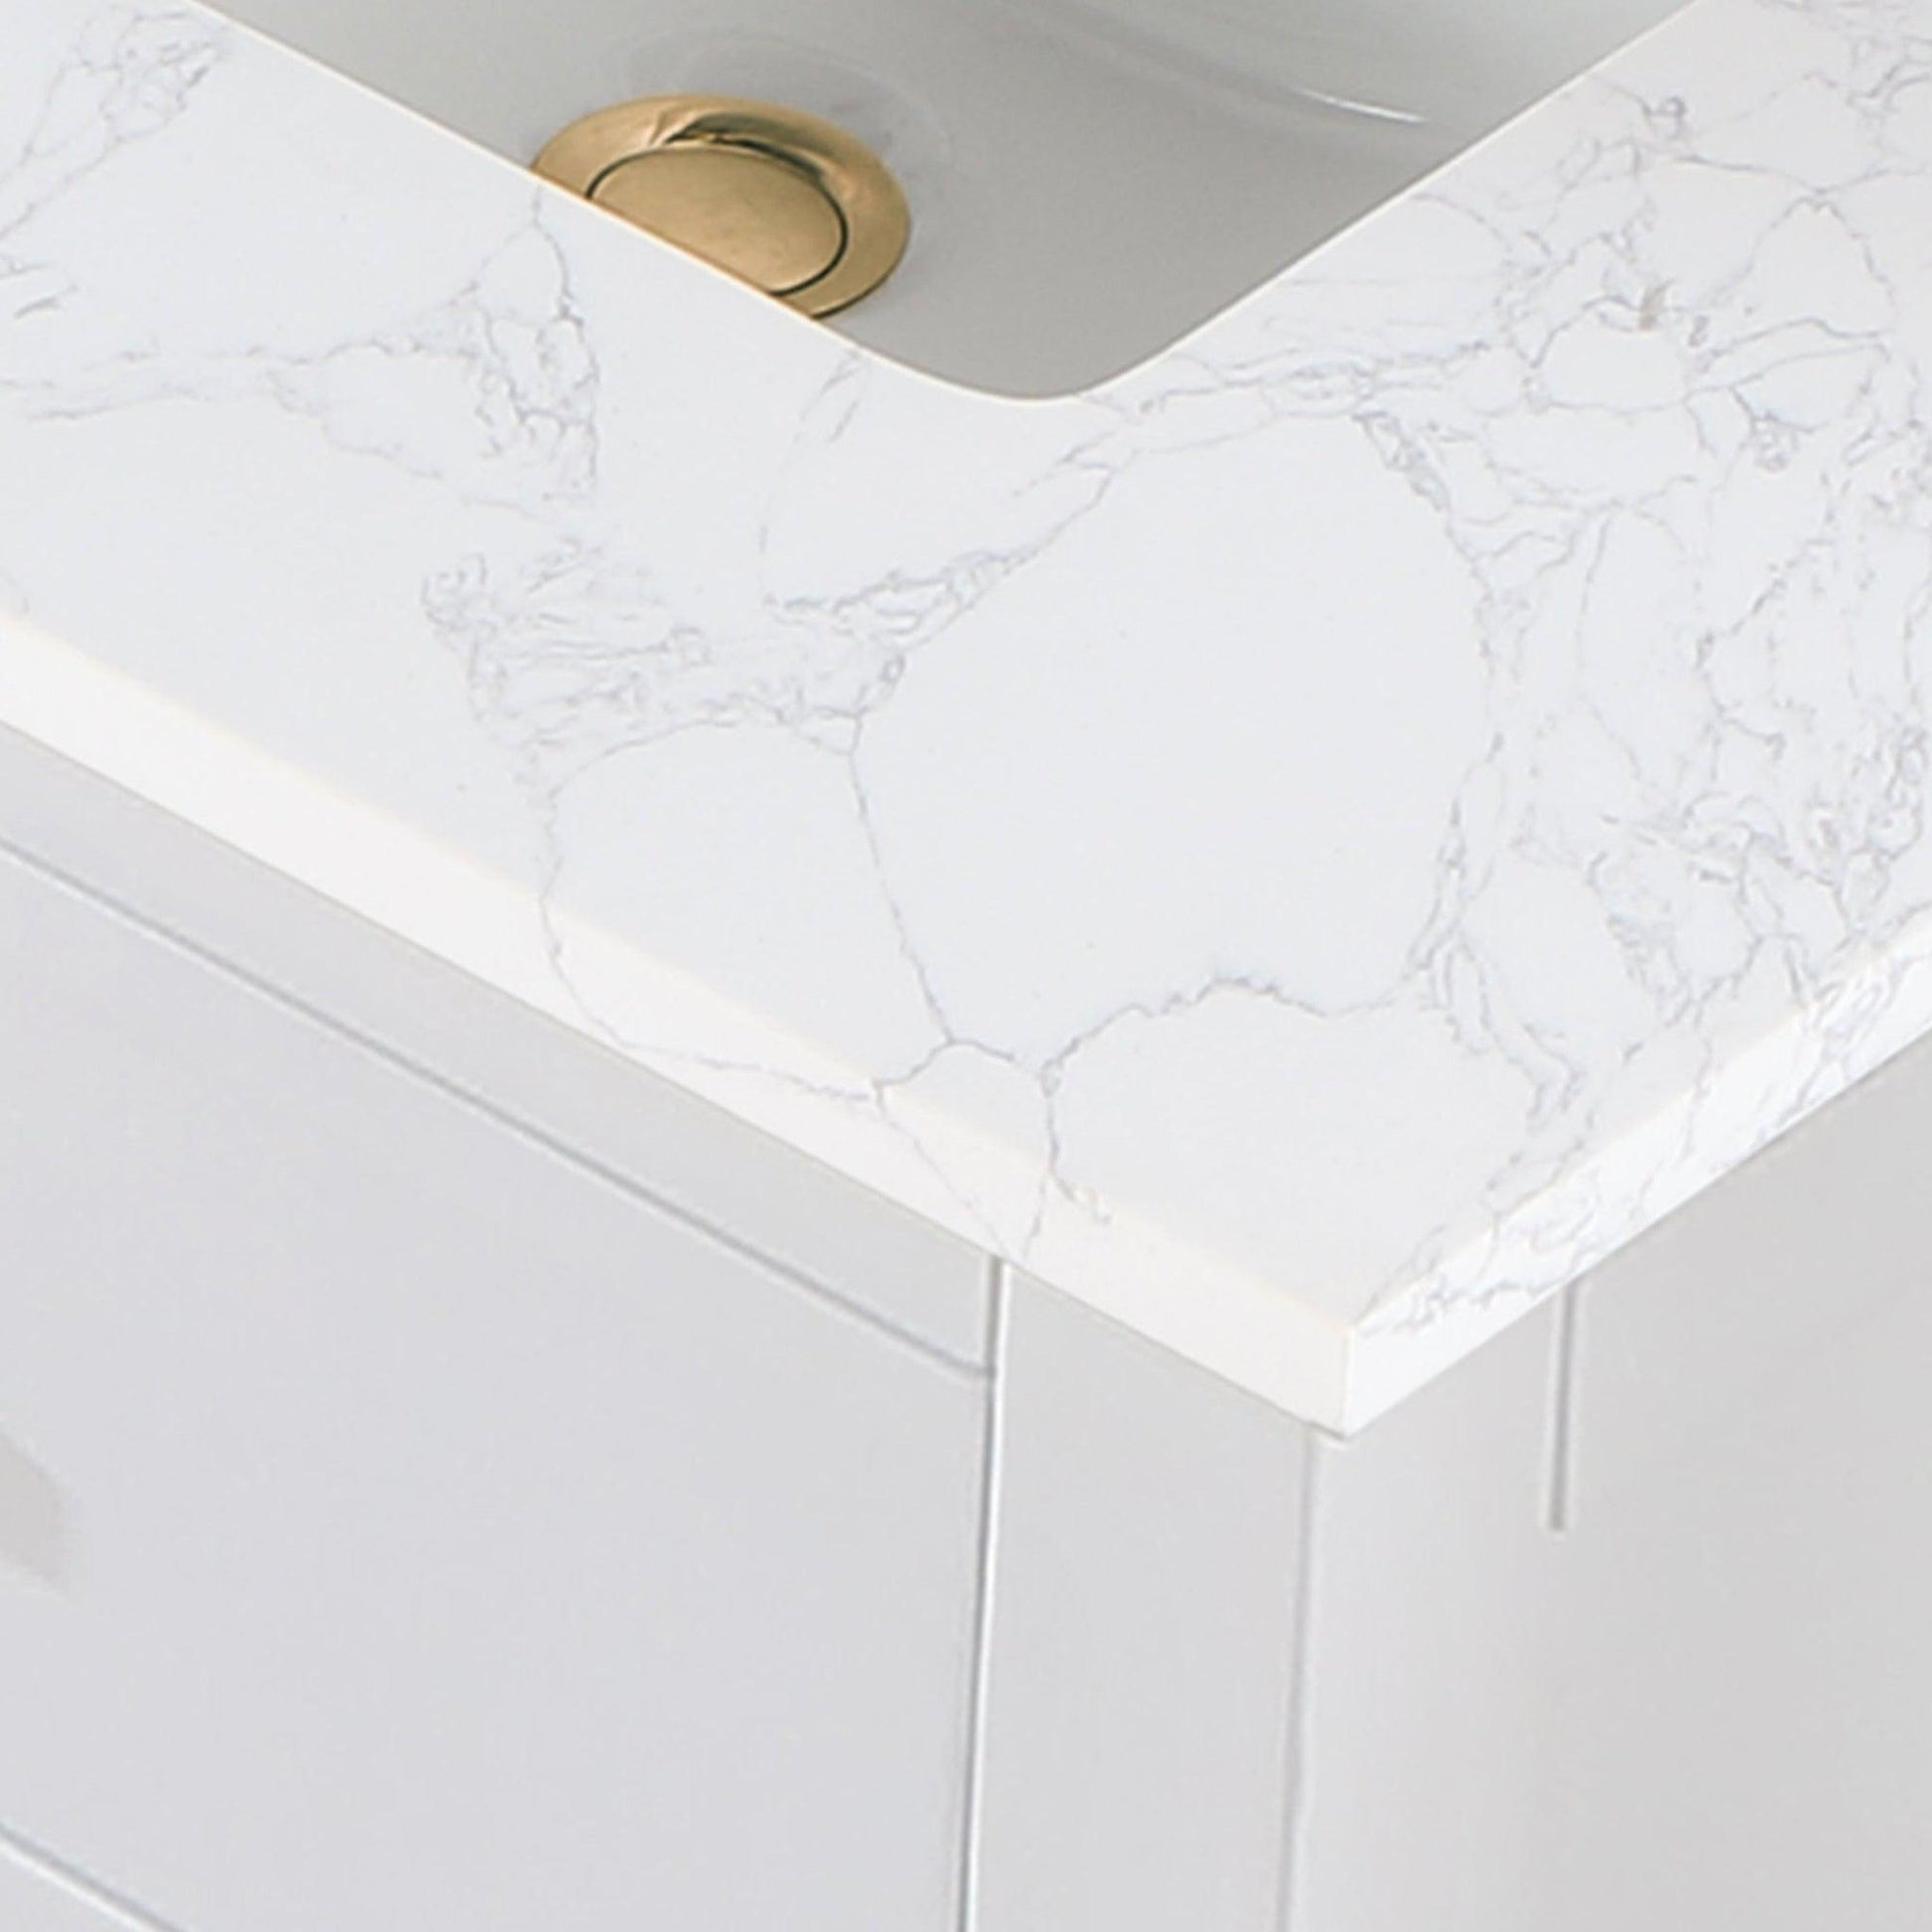 Altair Gavino 72" White Freestanding Double Bathroom Vanity Set With Grain White Composite Stone Top, Single Rectangular Undermount Ceramic Sink, Overflow, Sidesplash, and Backsplash